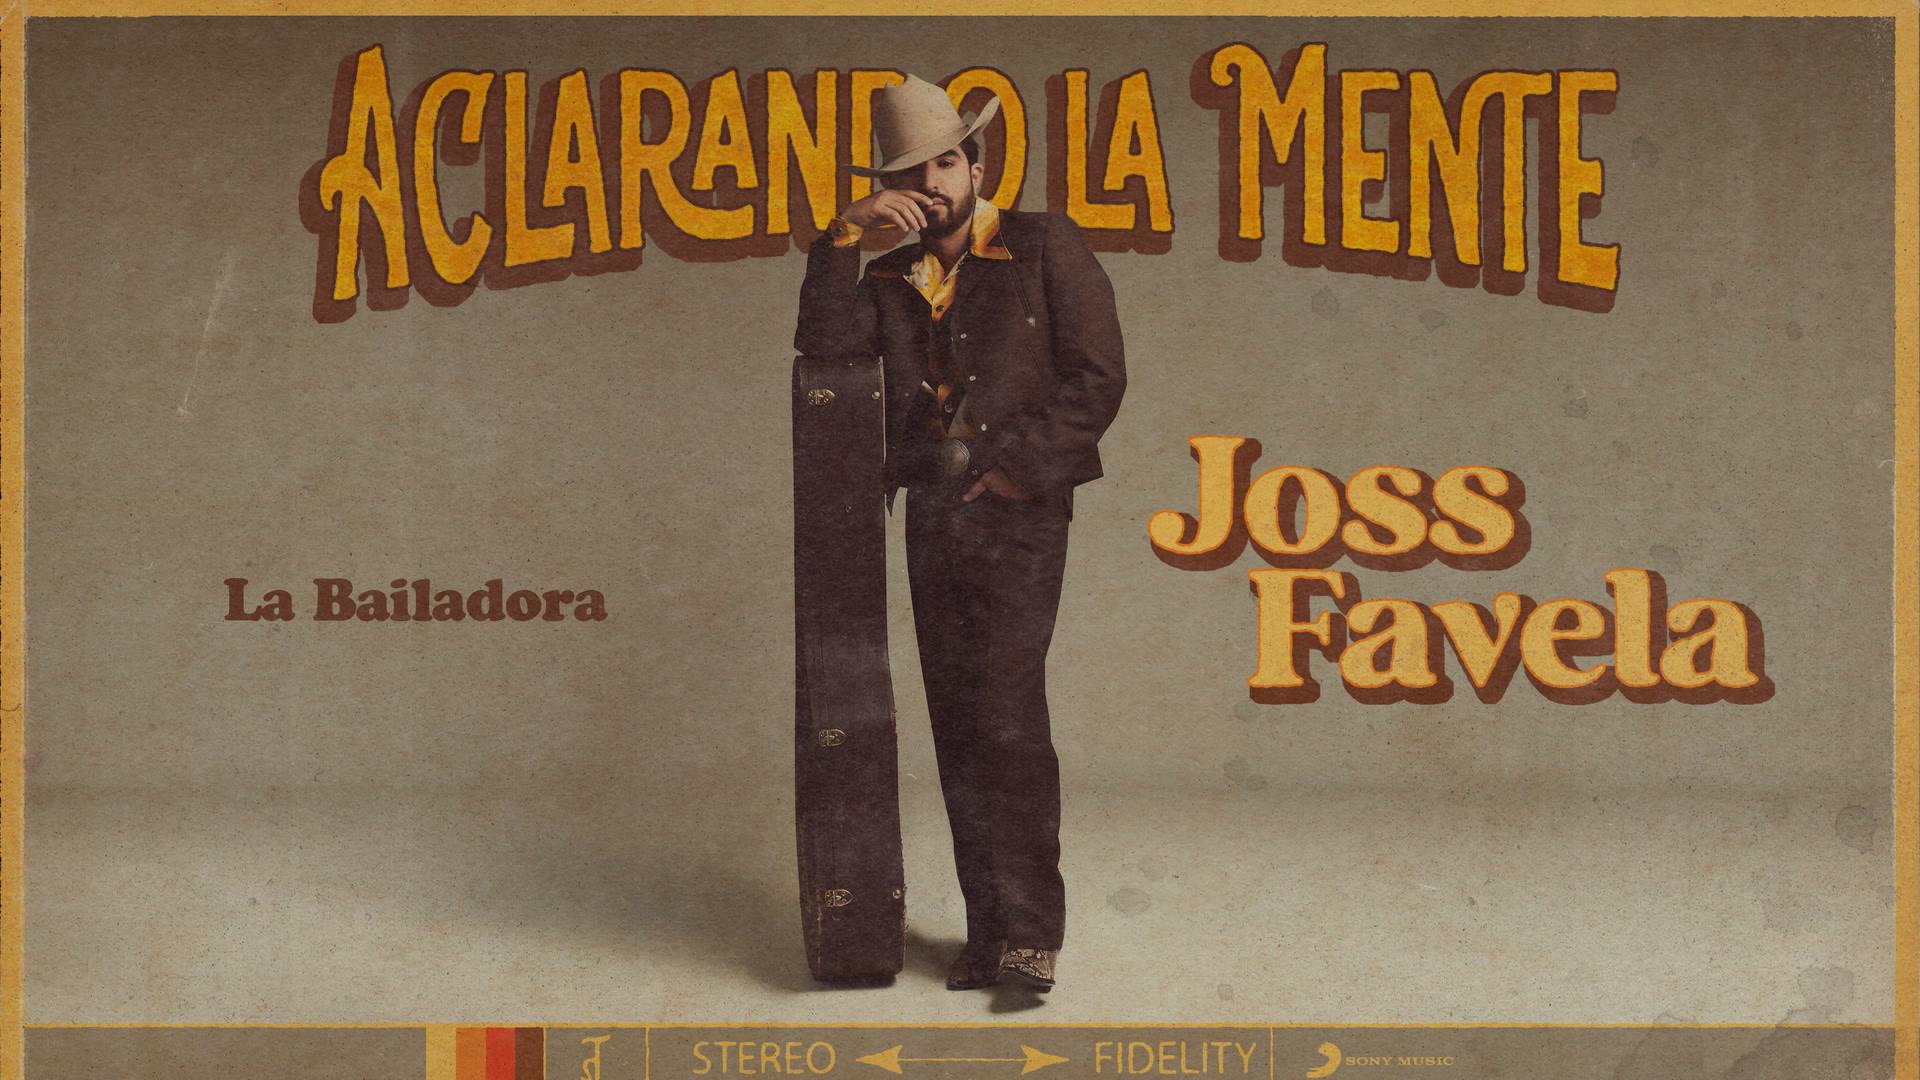 Joss Favela - La Bailadora (Audio)